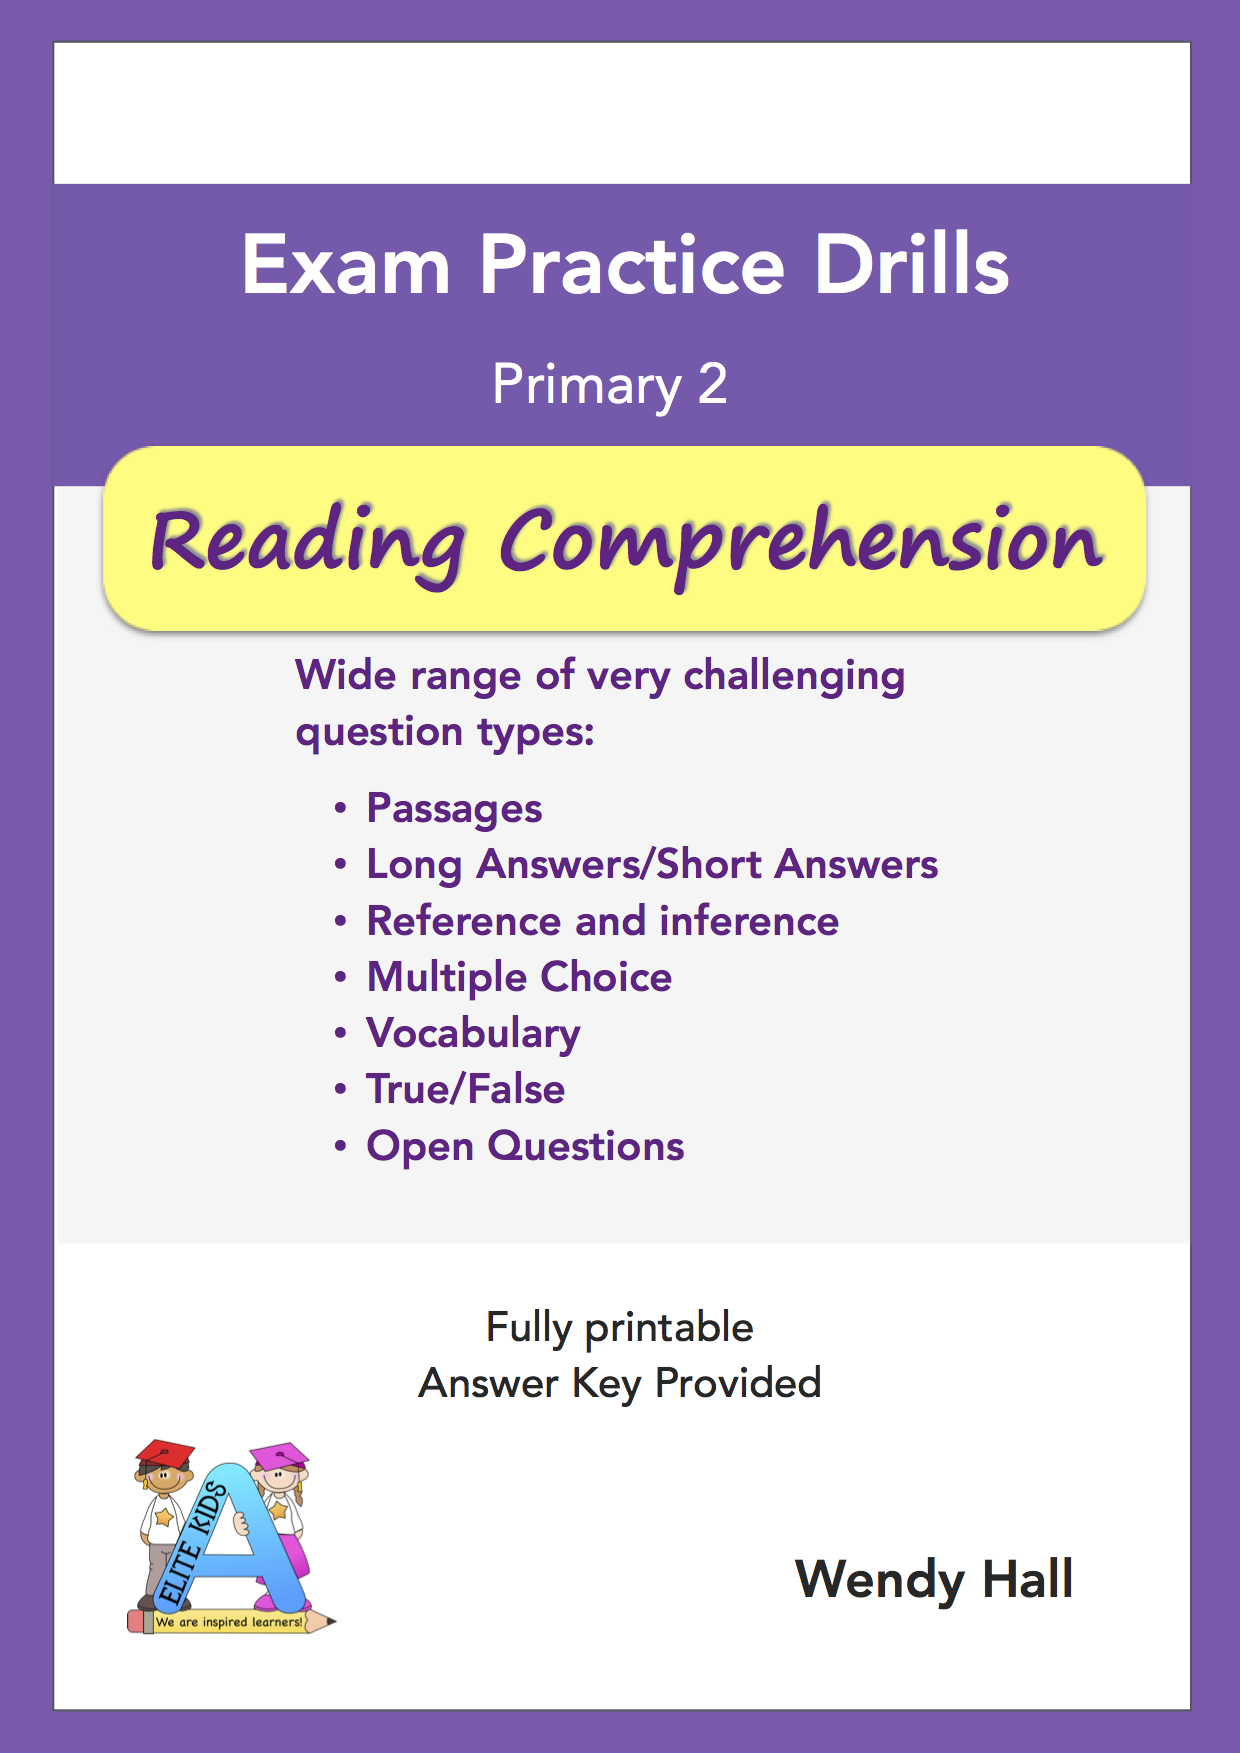 Elite Kids | Exam Practice Drills - Reading Comprehension - Primary 2